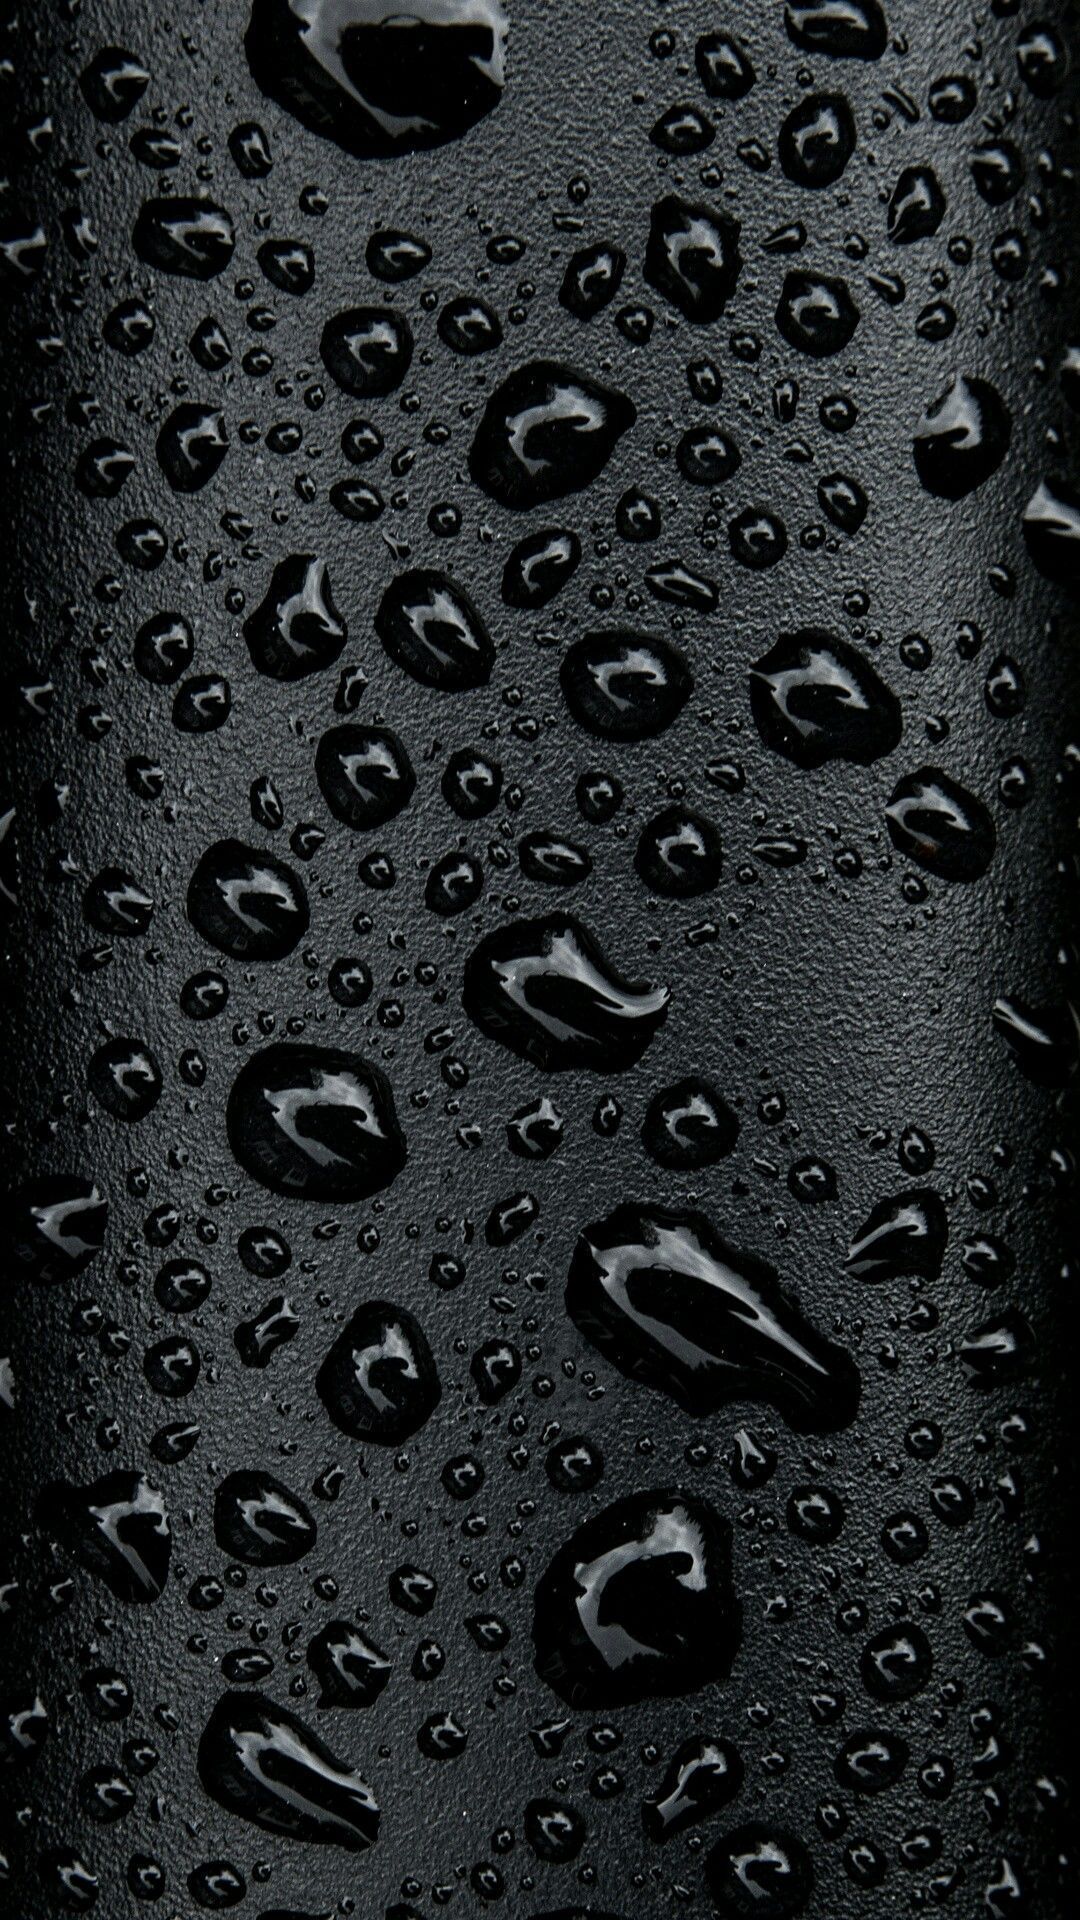 iphone x wallpaper 4k zedge New Black Water Droplets Wallpaper